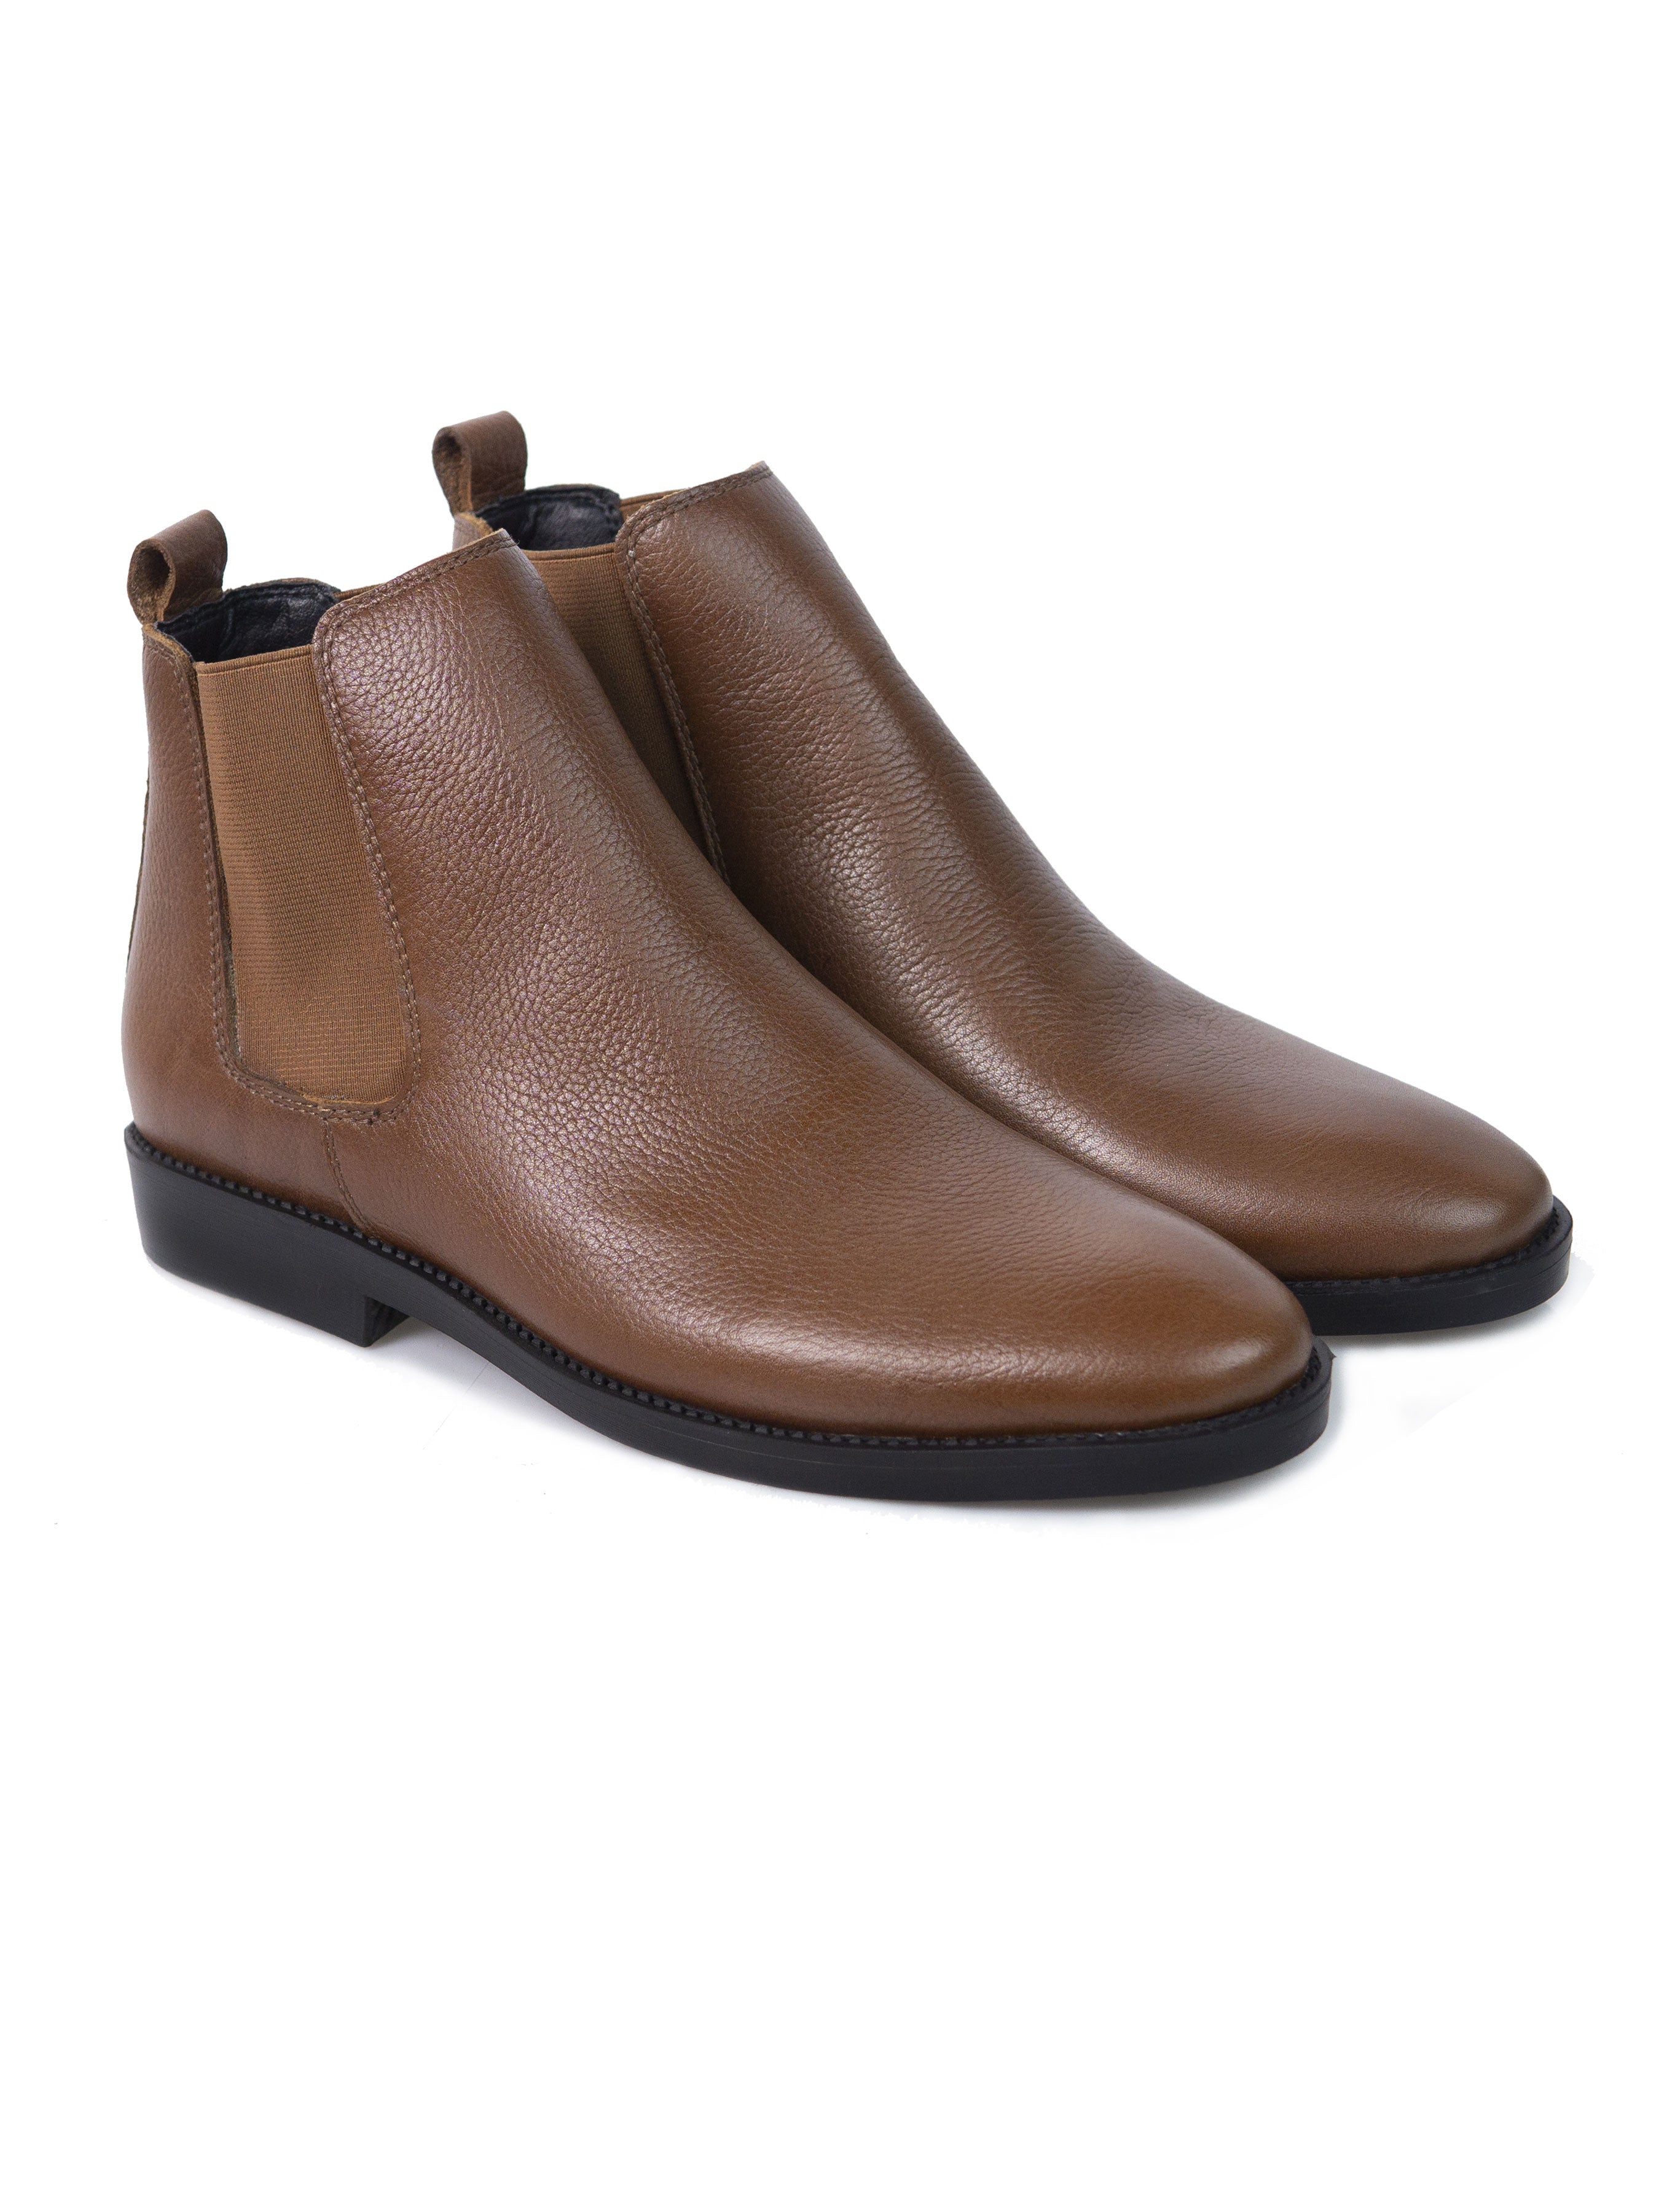 Chelsea Boots - Tobacco Brown Pebble Grain Leather (Crepe Sole) - Zeve Shoes